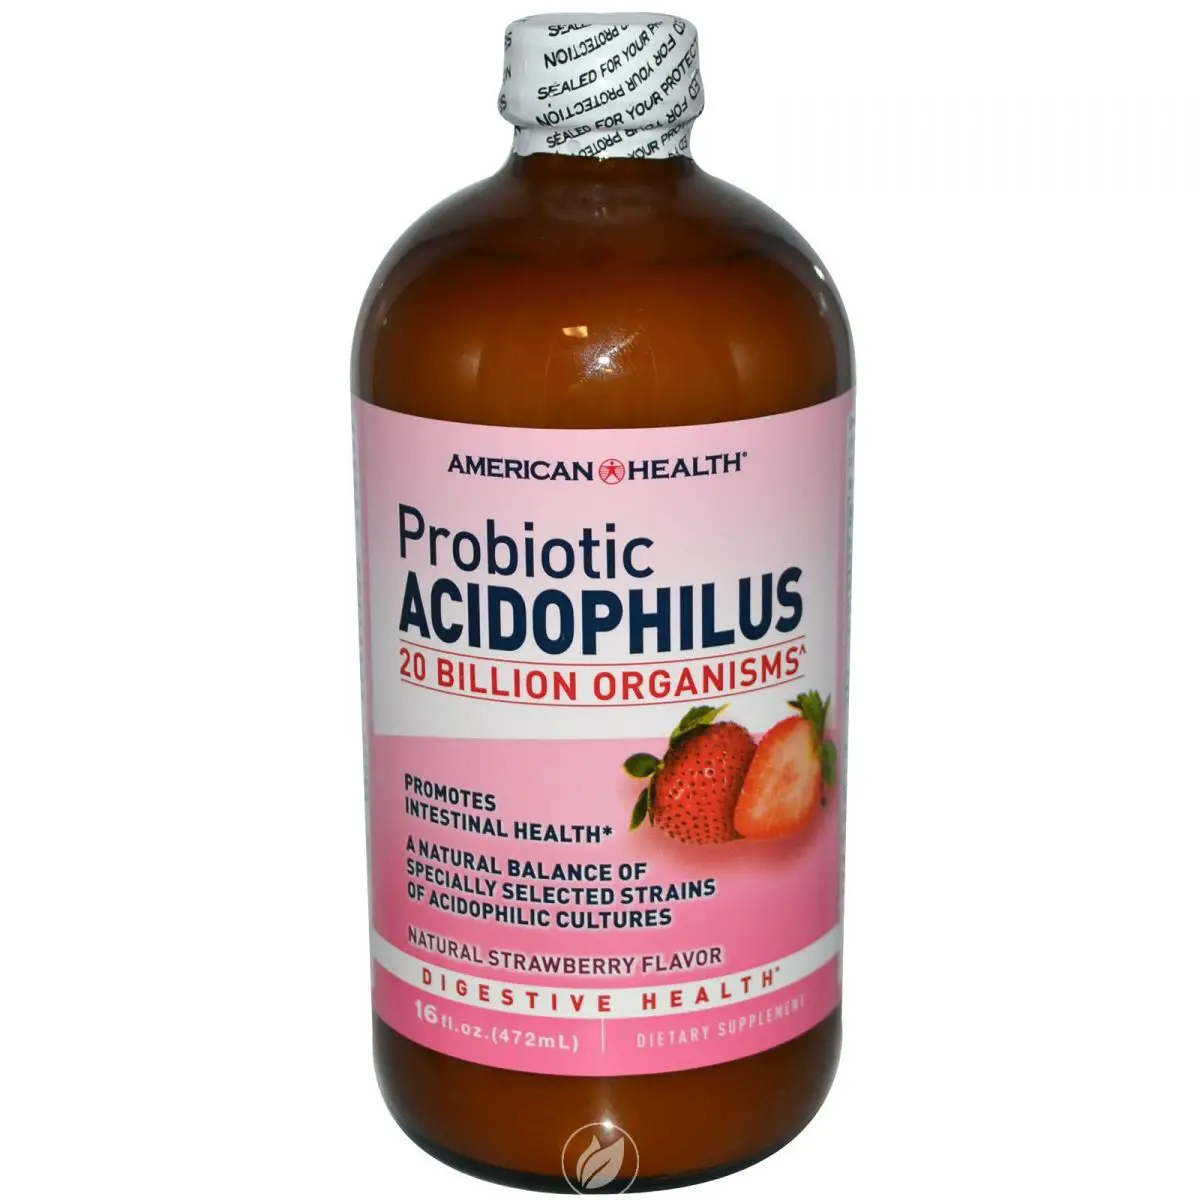 American Health Acidophilus Culture